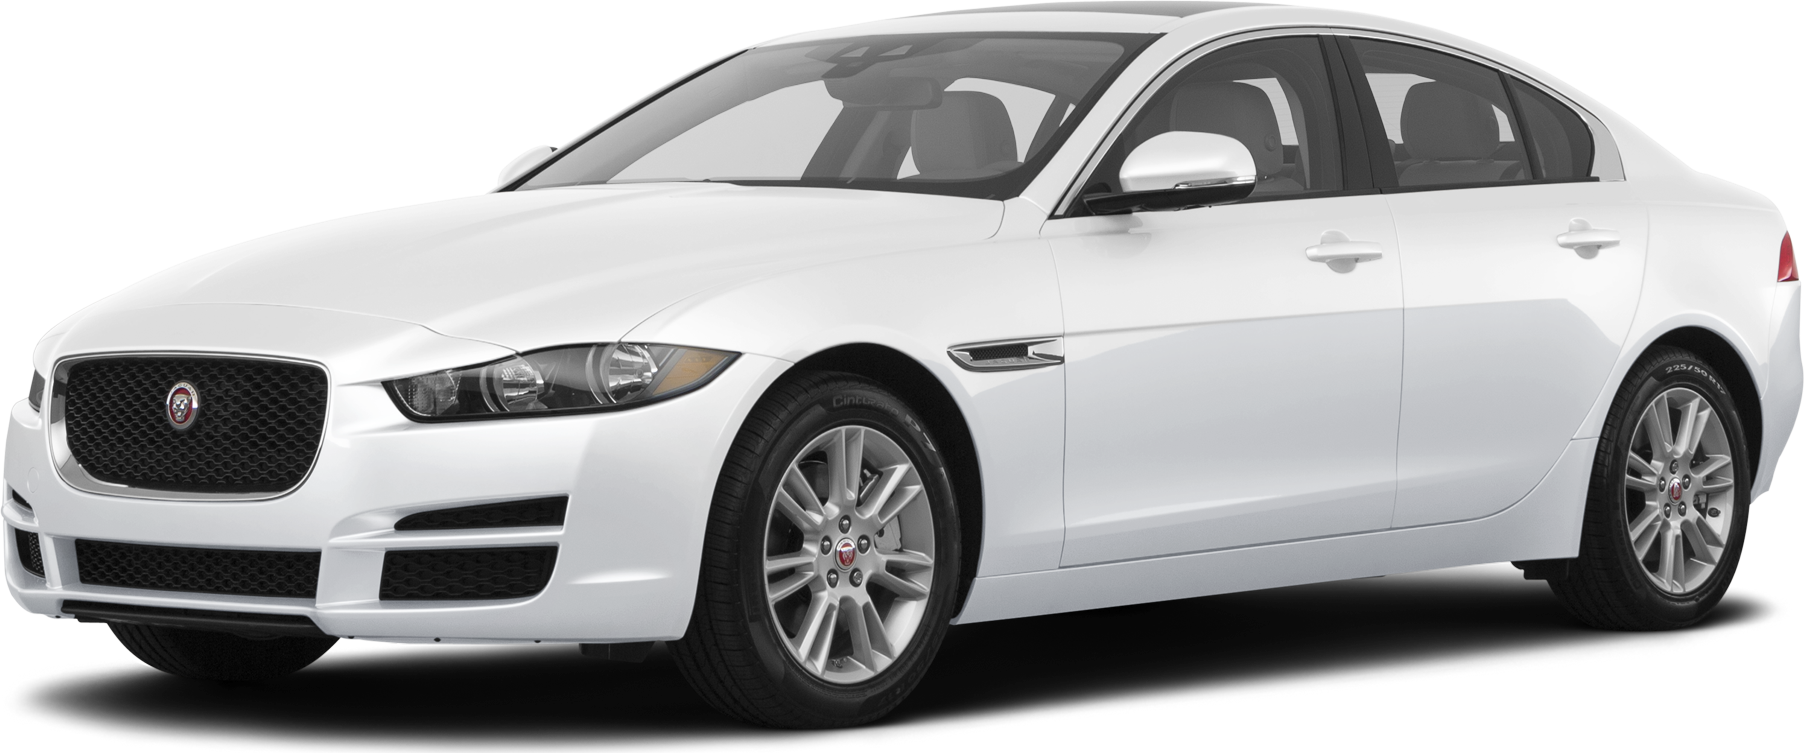 2018 Jaguar Xe Price Value Ratings And Reviews Kelley Blue Book